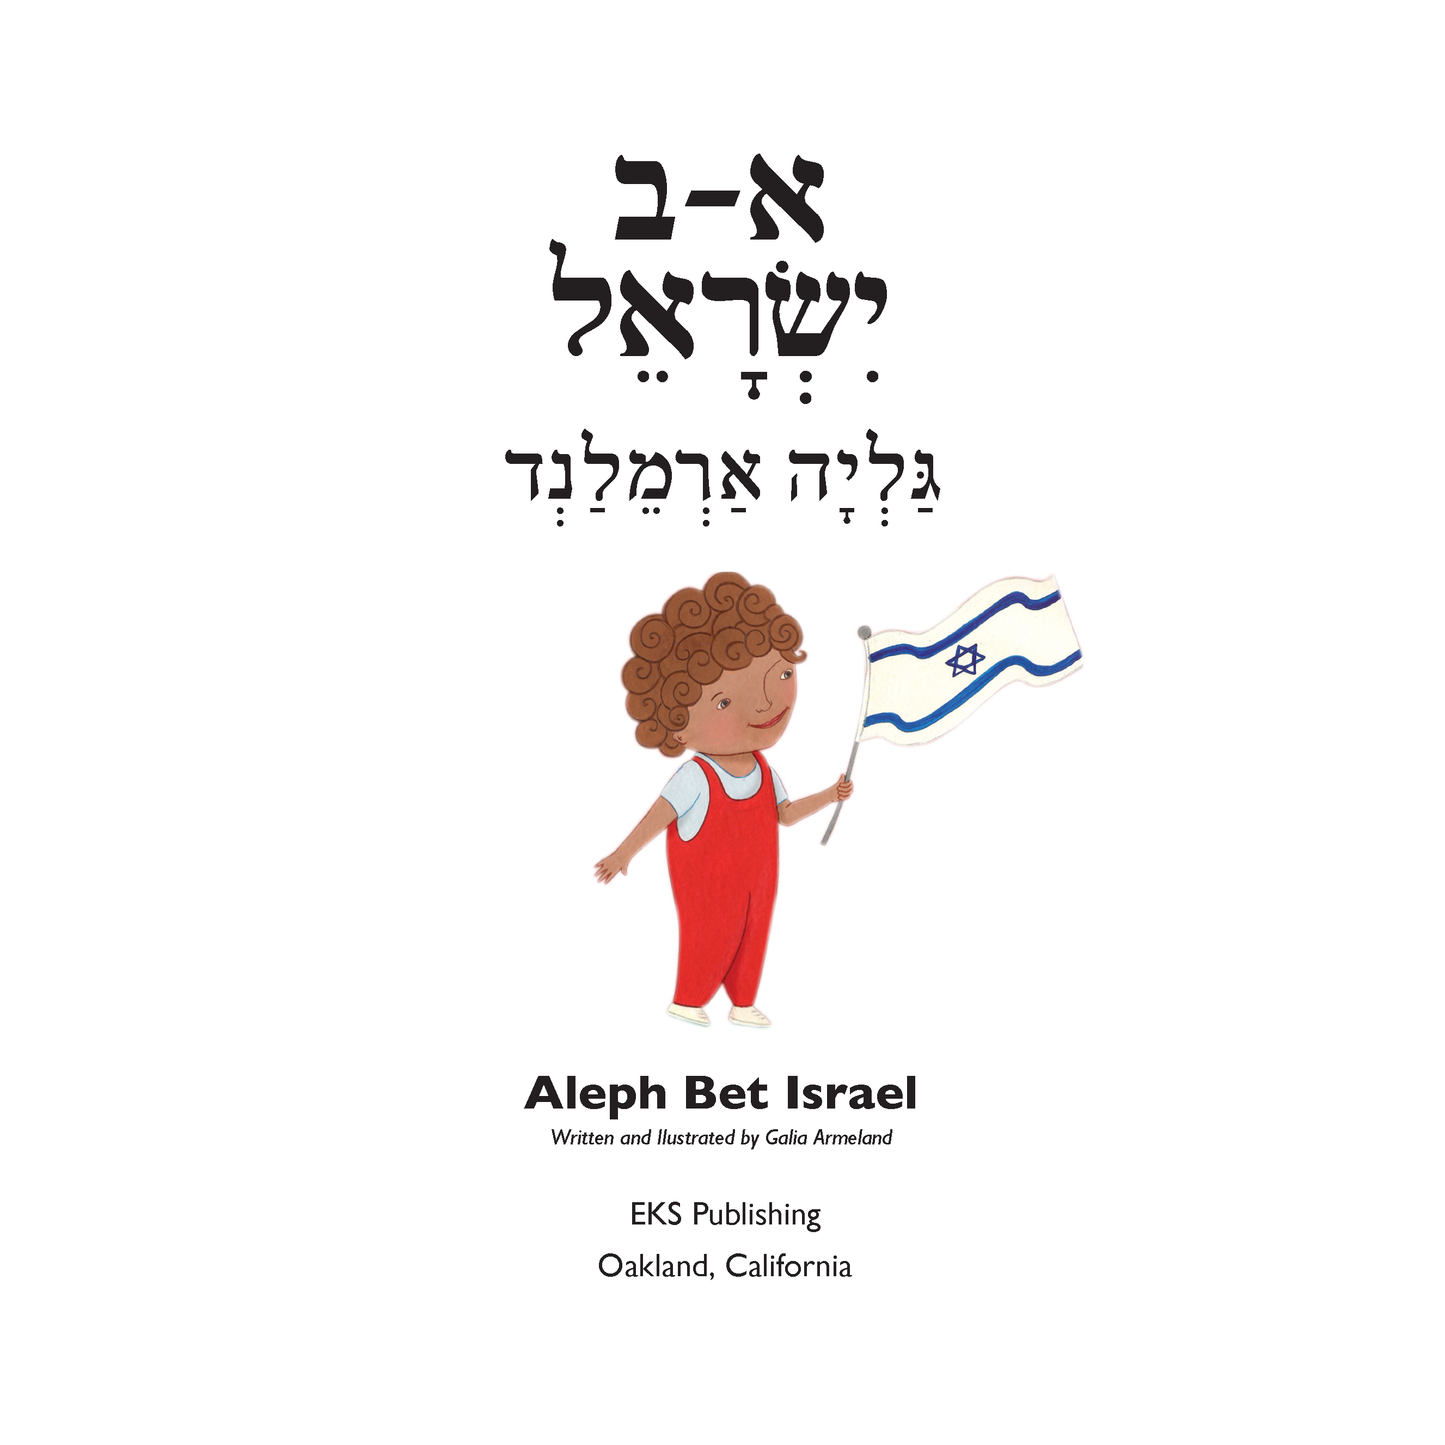 Aleph Bet Israel